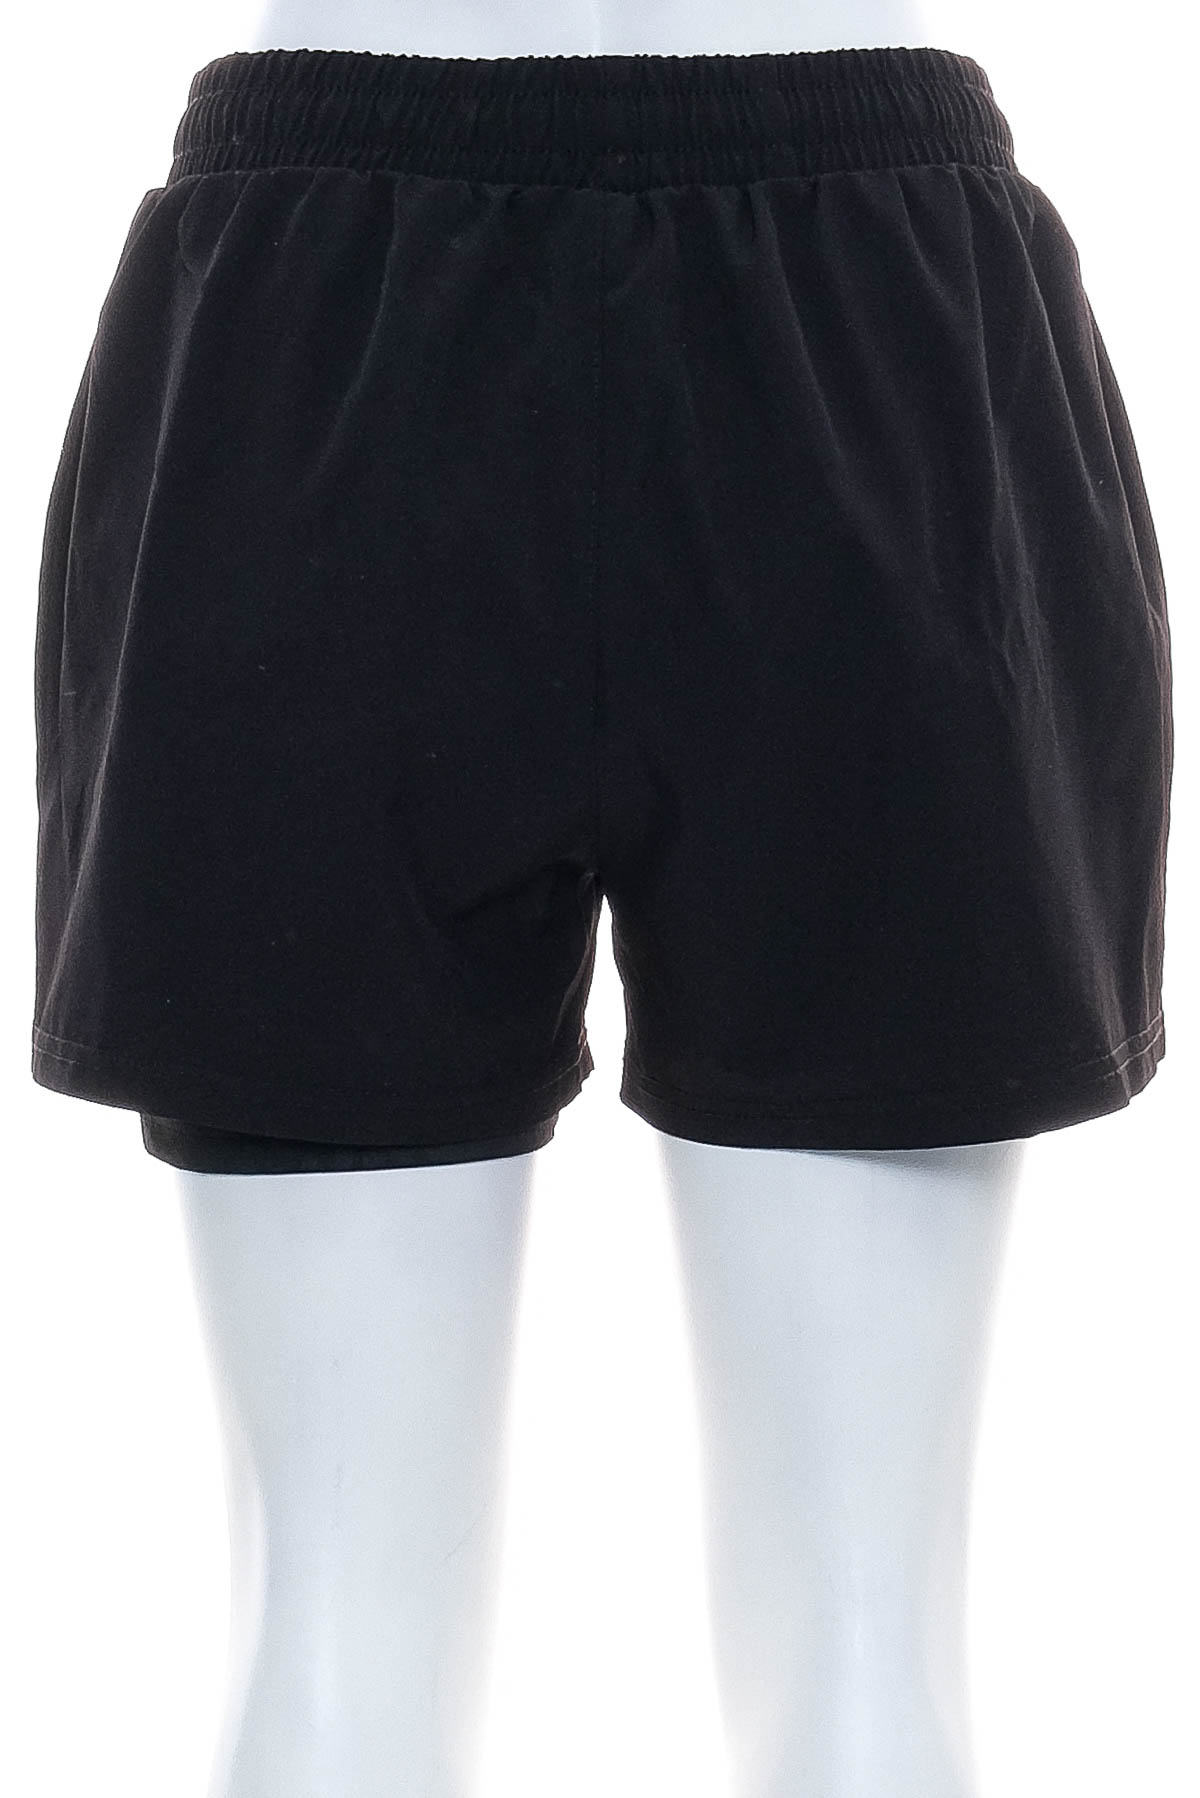 Women's shorts - Redmax - 1